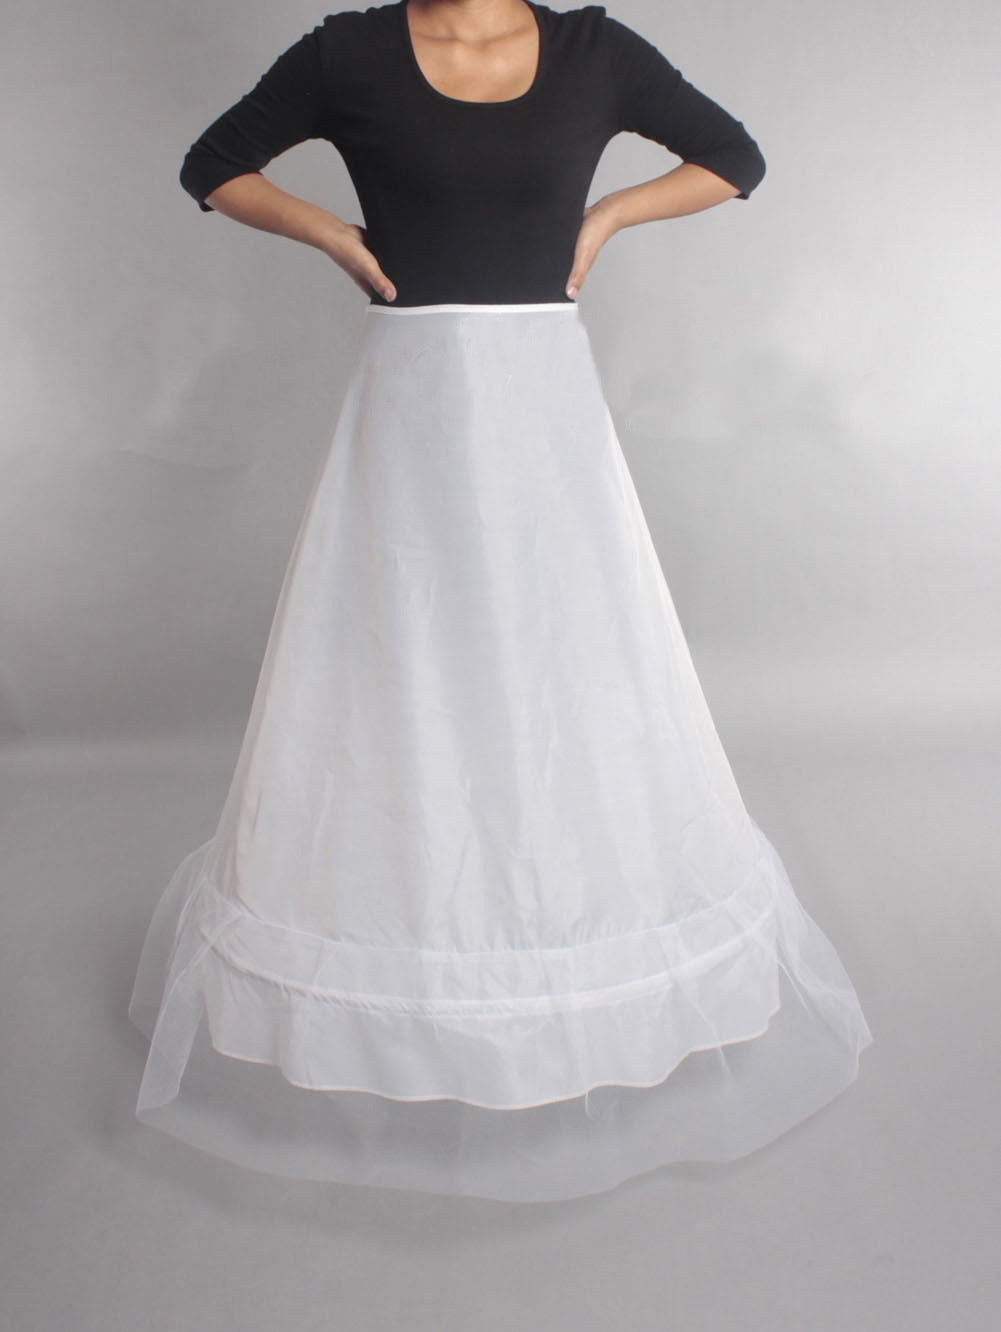 In Store Underskirt Bridal Dress Hoop Wedding Petticoat Crinoline Slip PromI